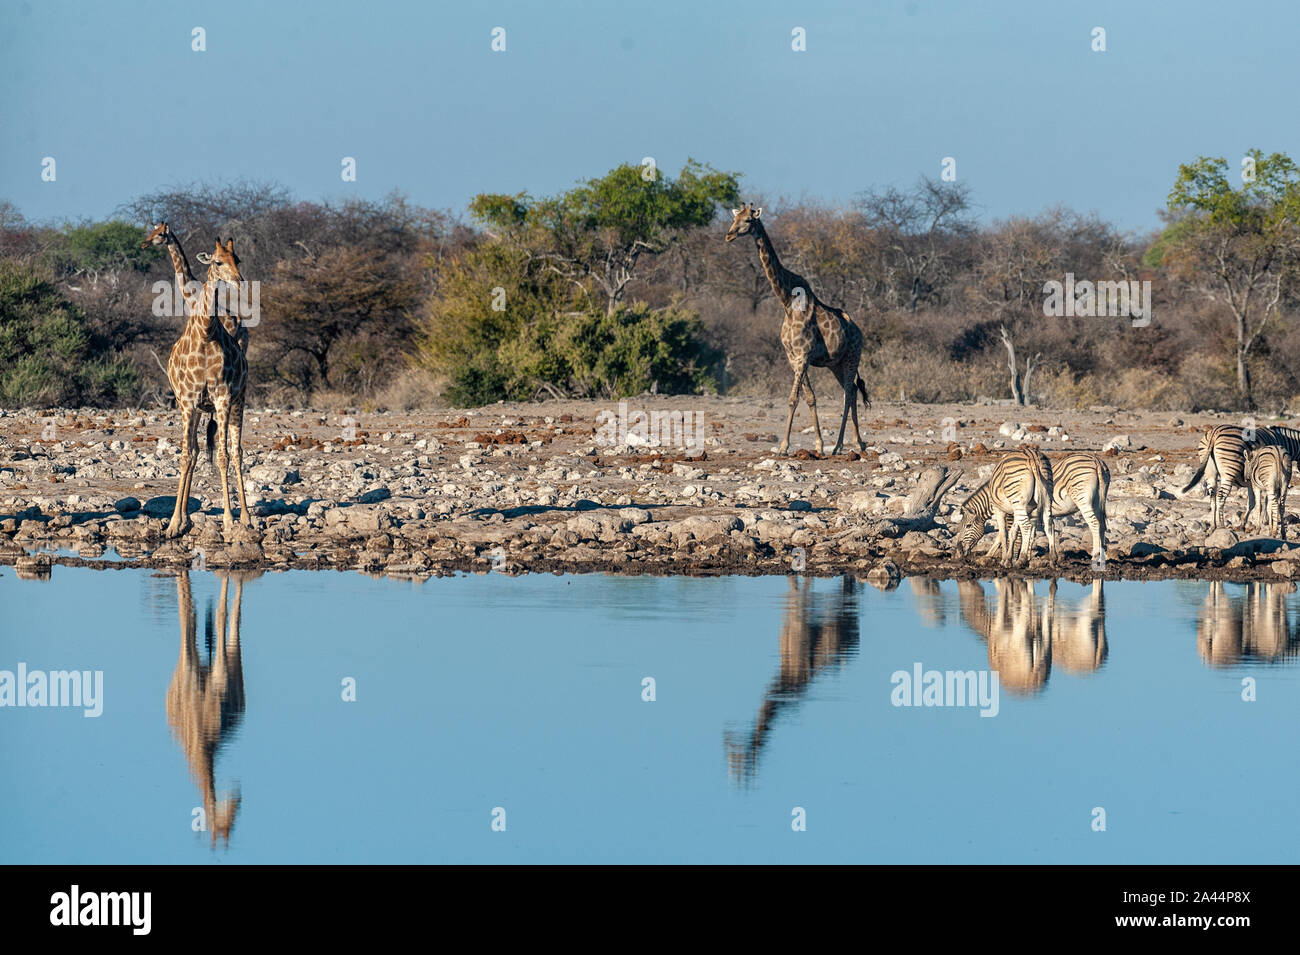 A group of Angolan Giraffe - Giraffa giraffa angolensis- and Burchells zebra -Equus quagga- burchellii)drinking from a waterhole, while being reflected in the surface of the water. Etosha National Park, Namibia. Stock Photo